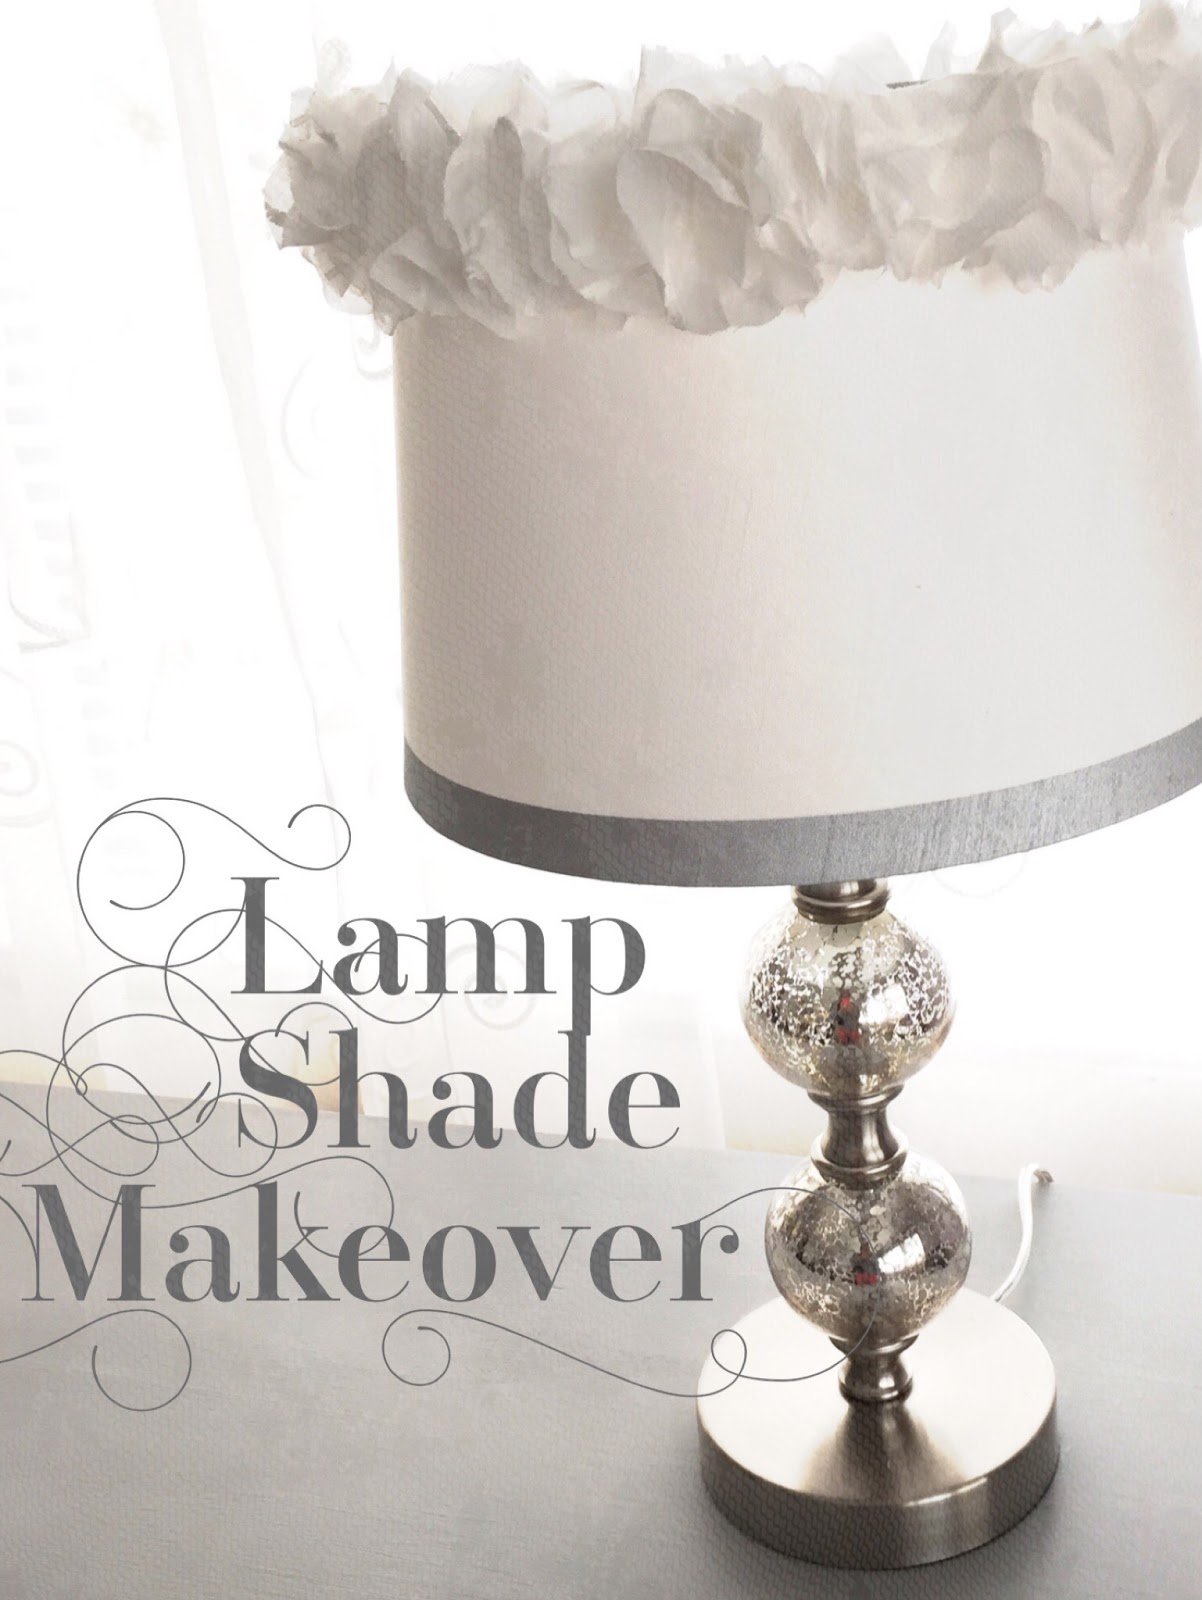 Ruffle lamp shade makeover tutorial